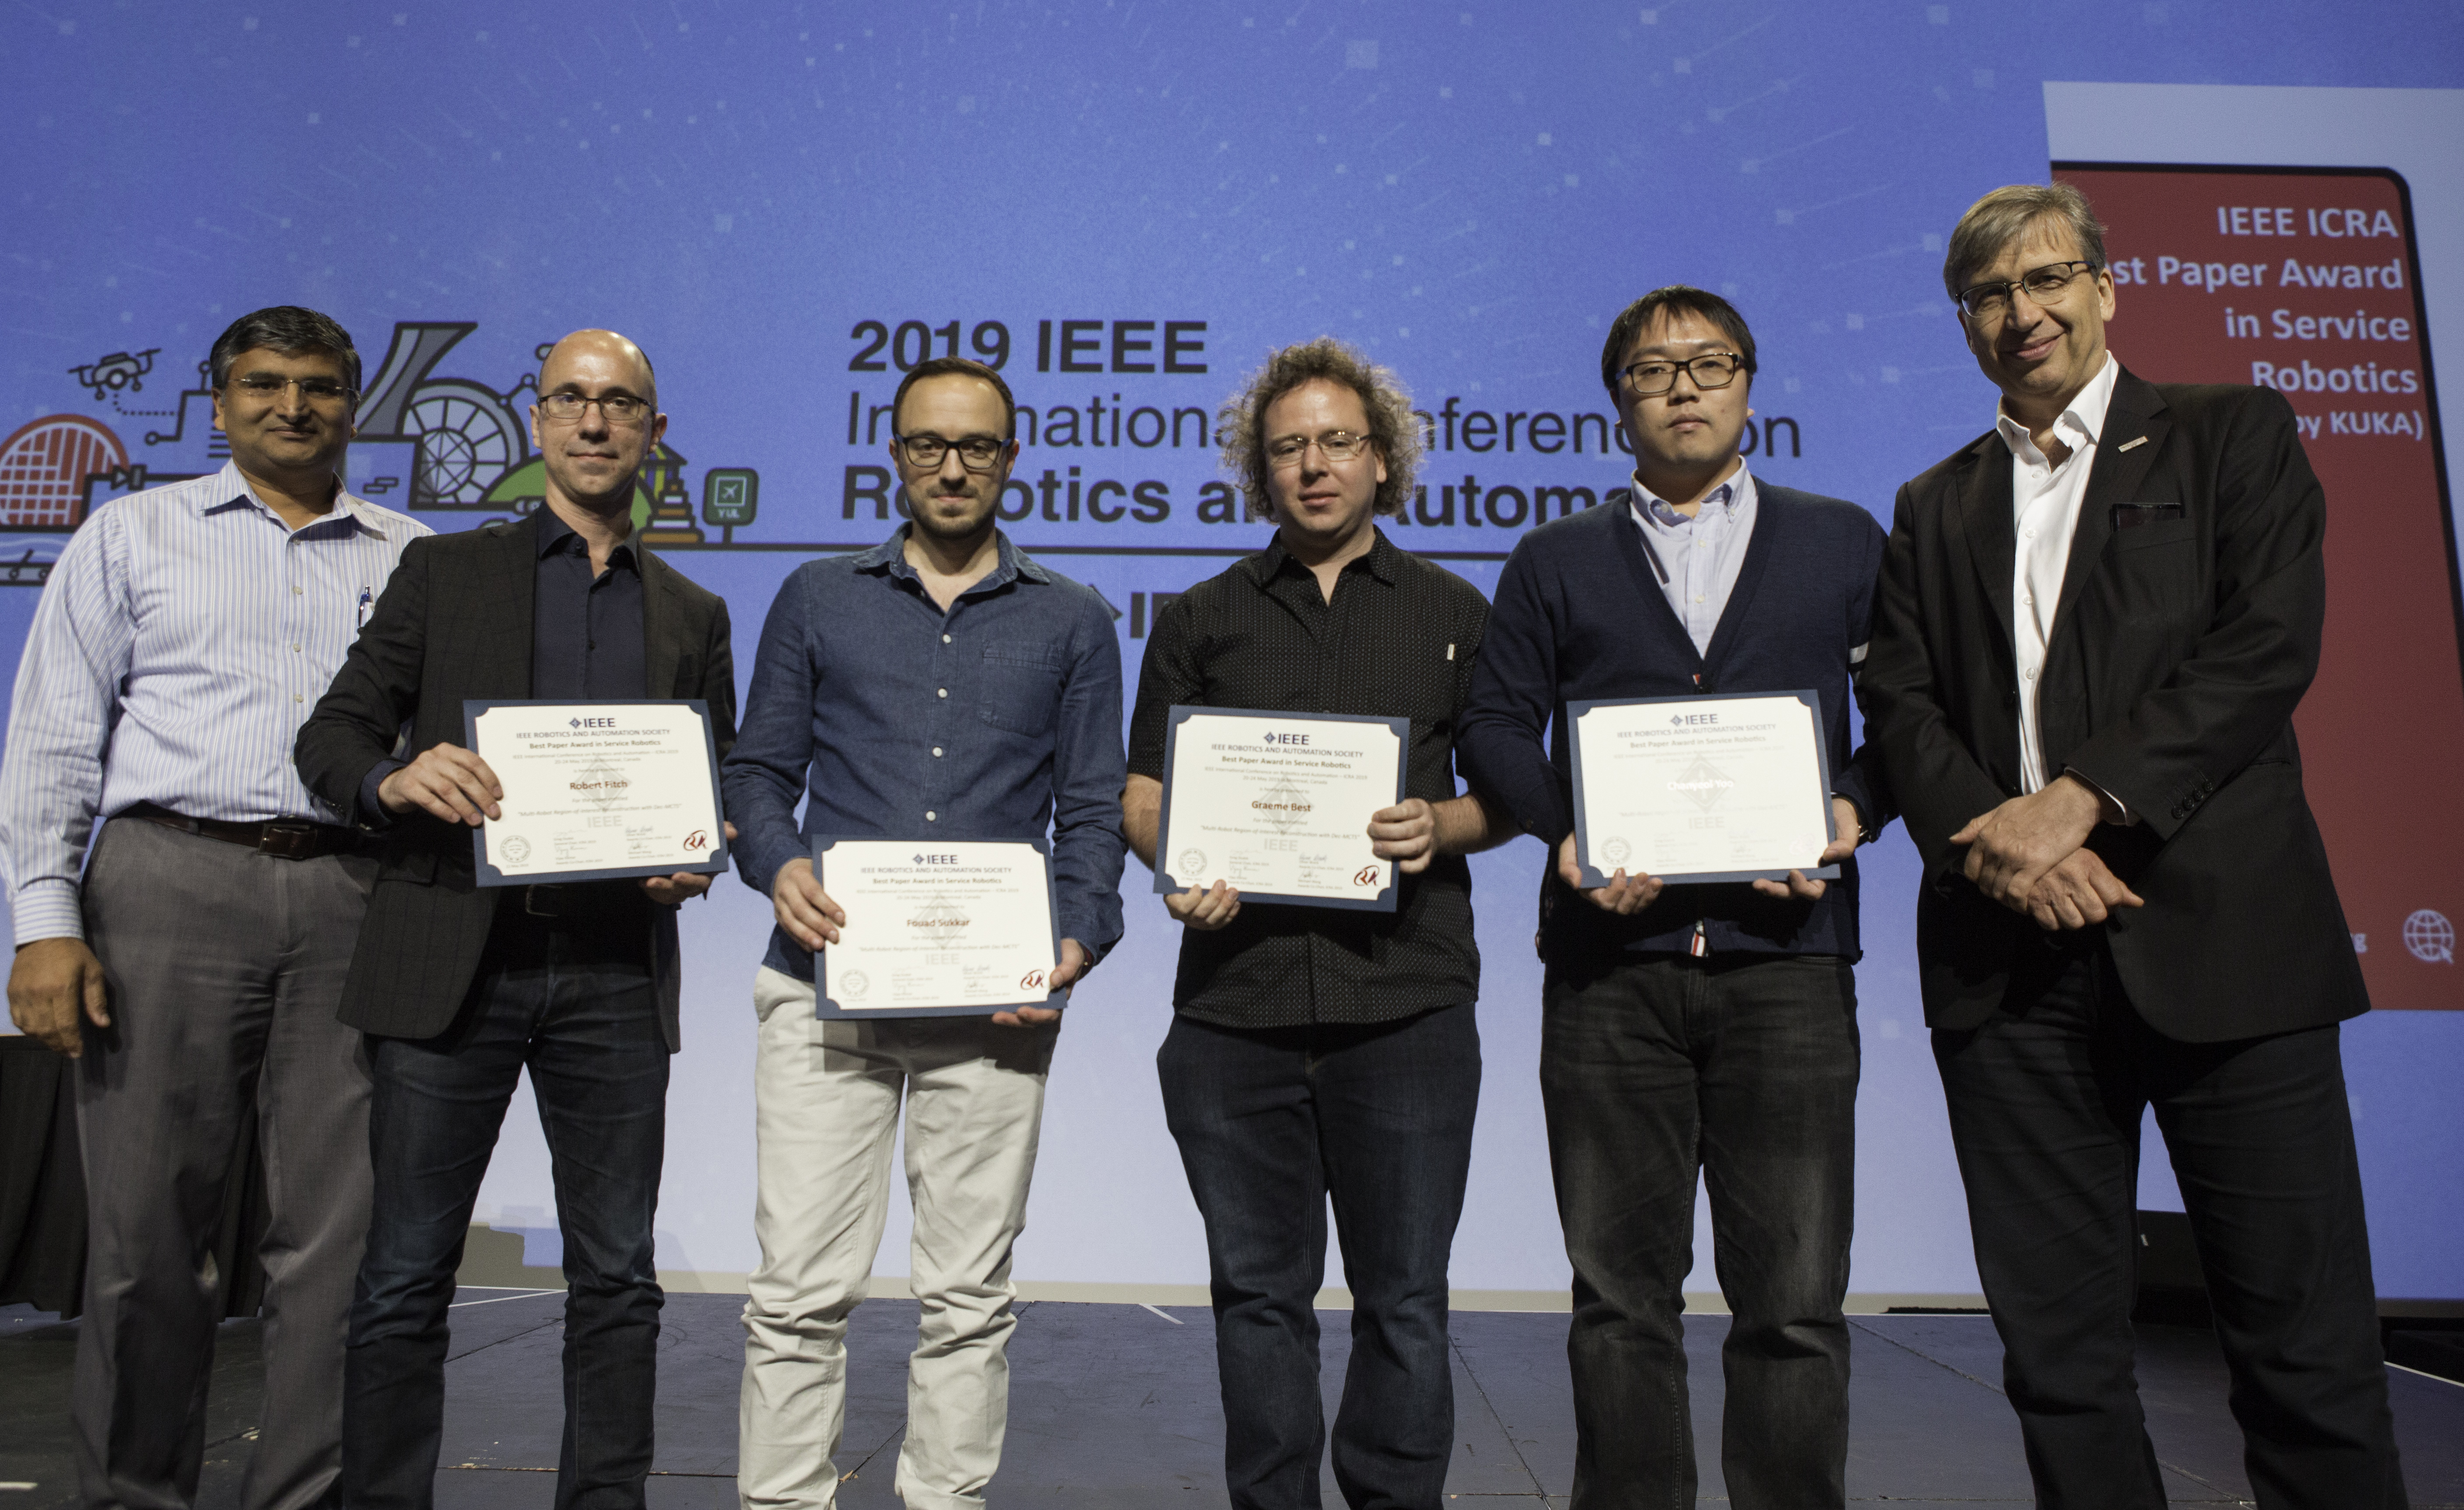 Best Paper Award in Service Robotics